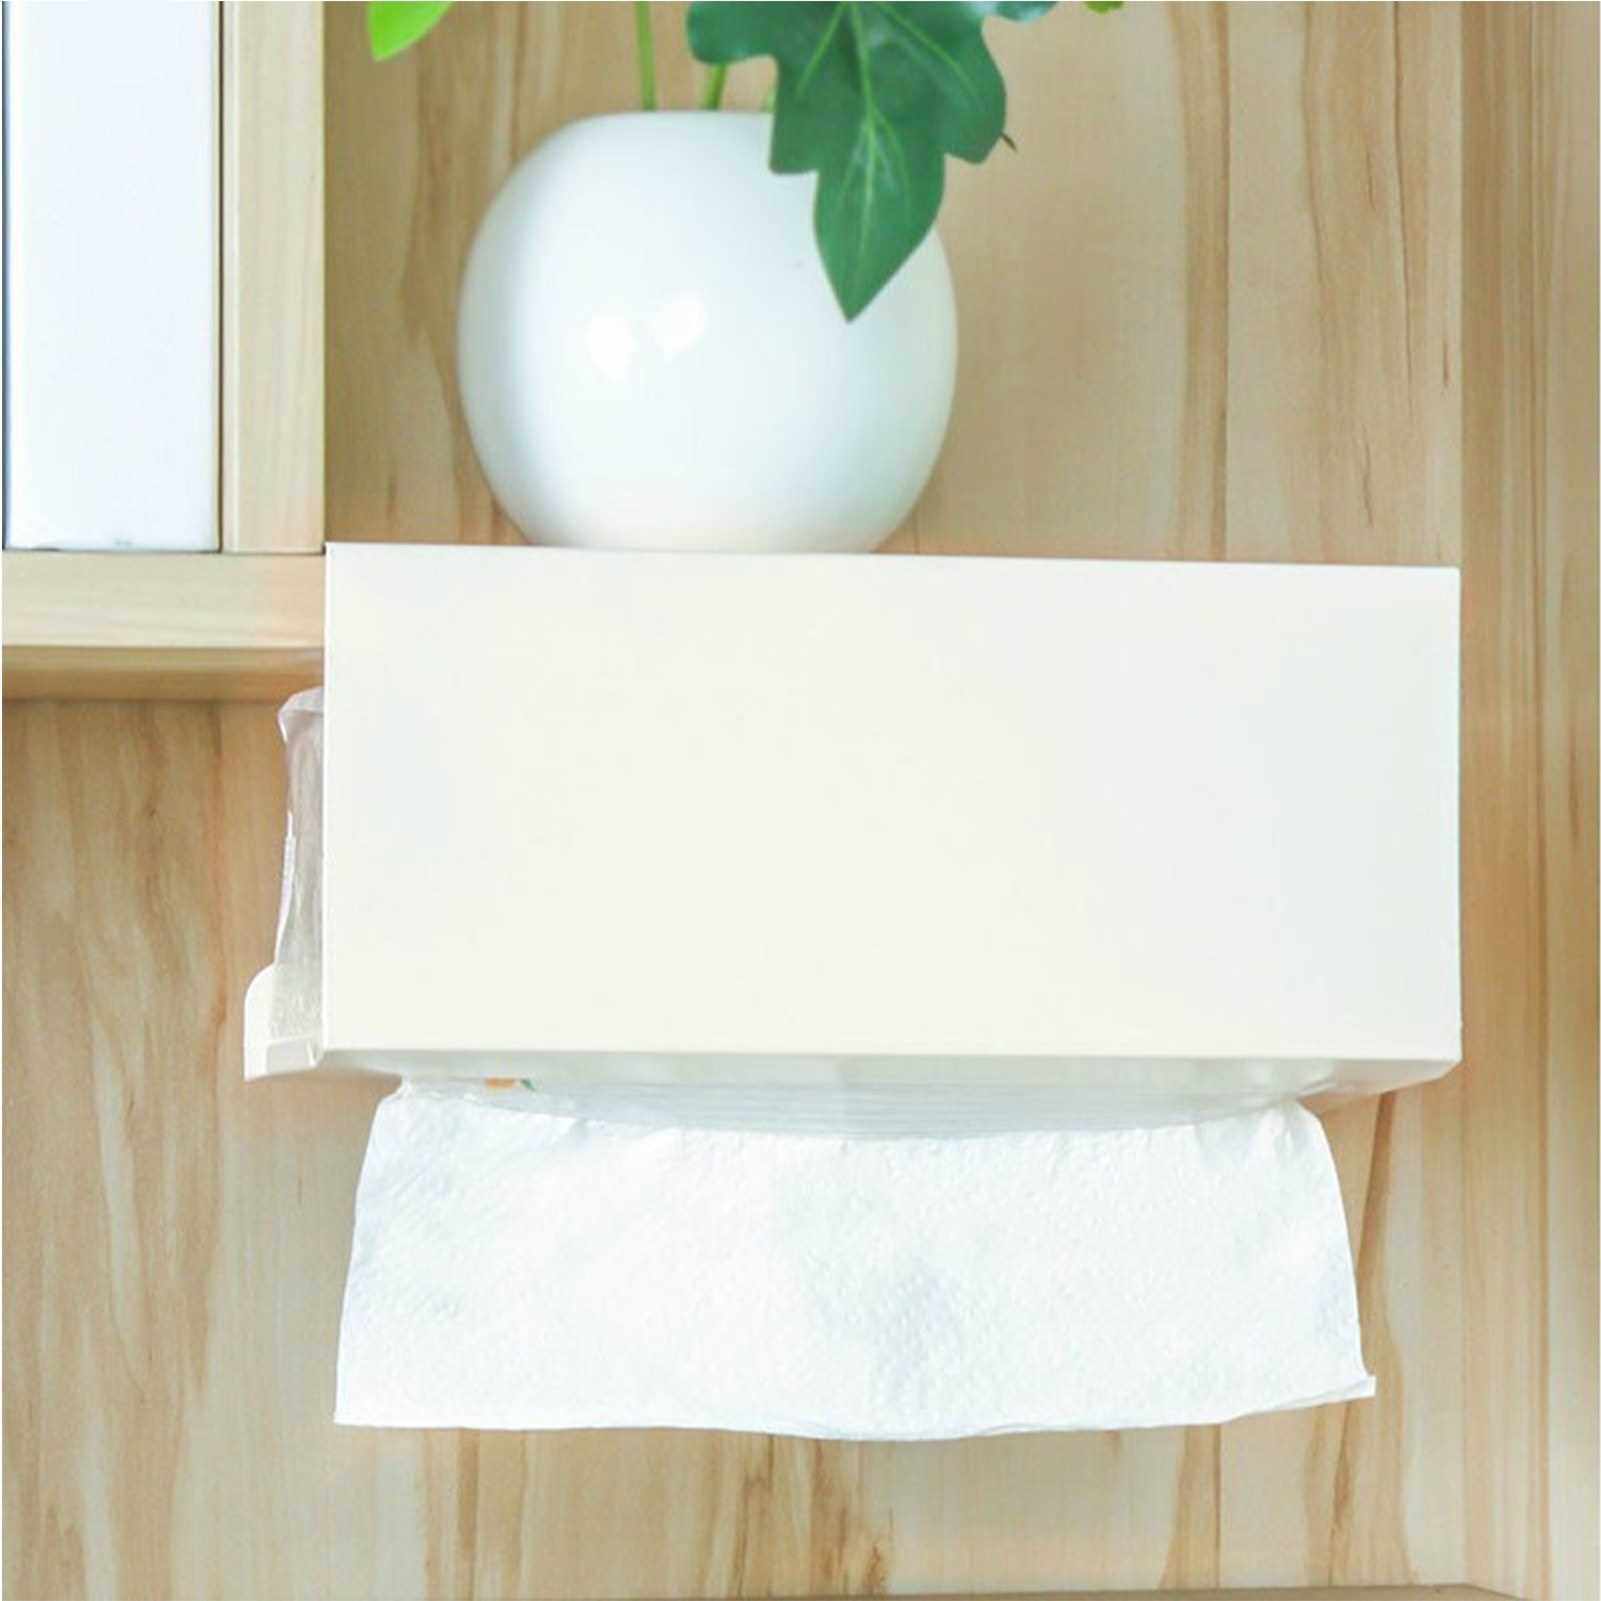 BEST SELLER Cabinets Paper Towel Holder Under The Cabinet Paper Dispenser Over The Door Towel Rack Without Drilling for Kitchen Bathroom (Black)